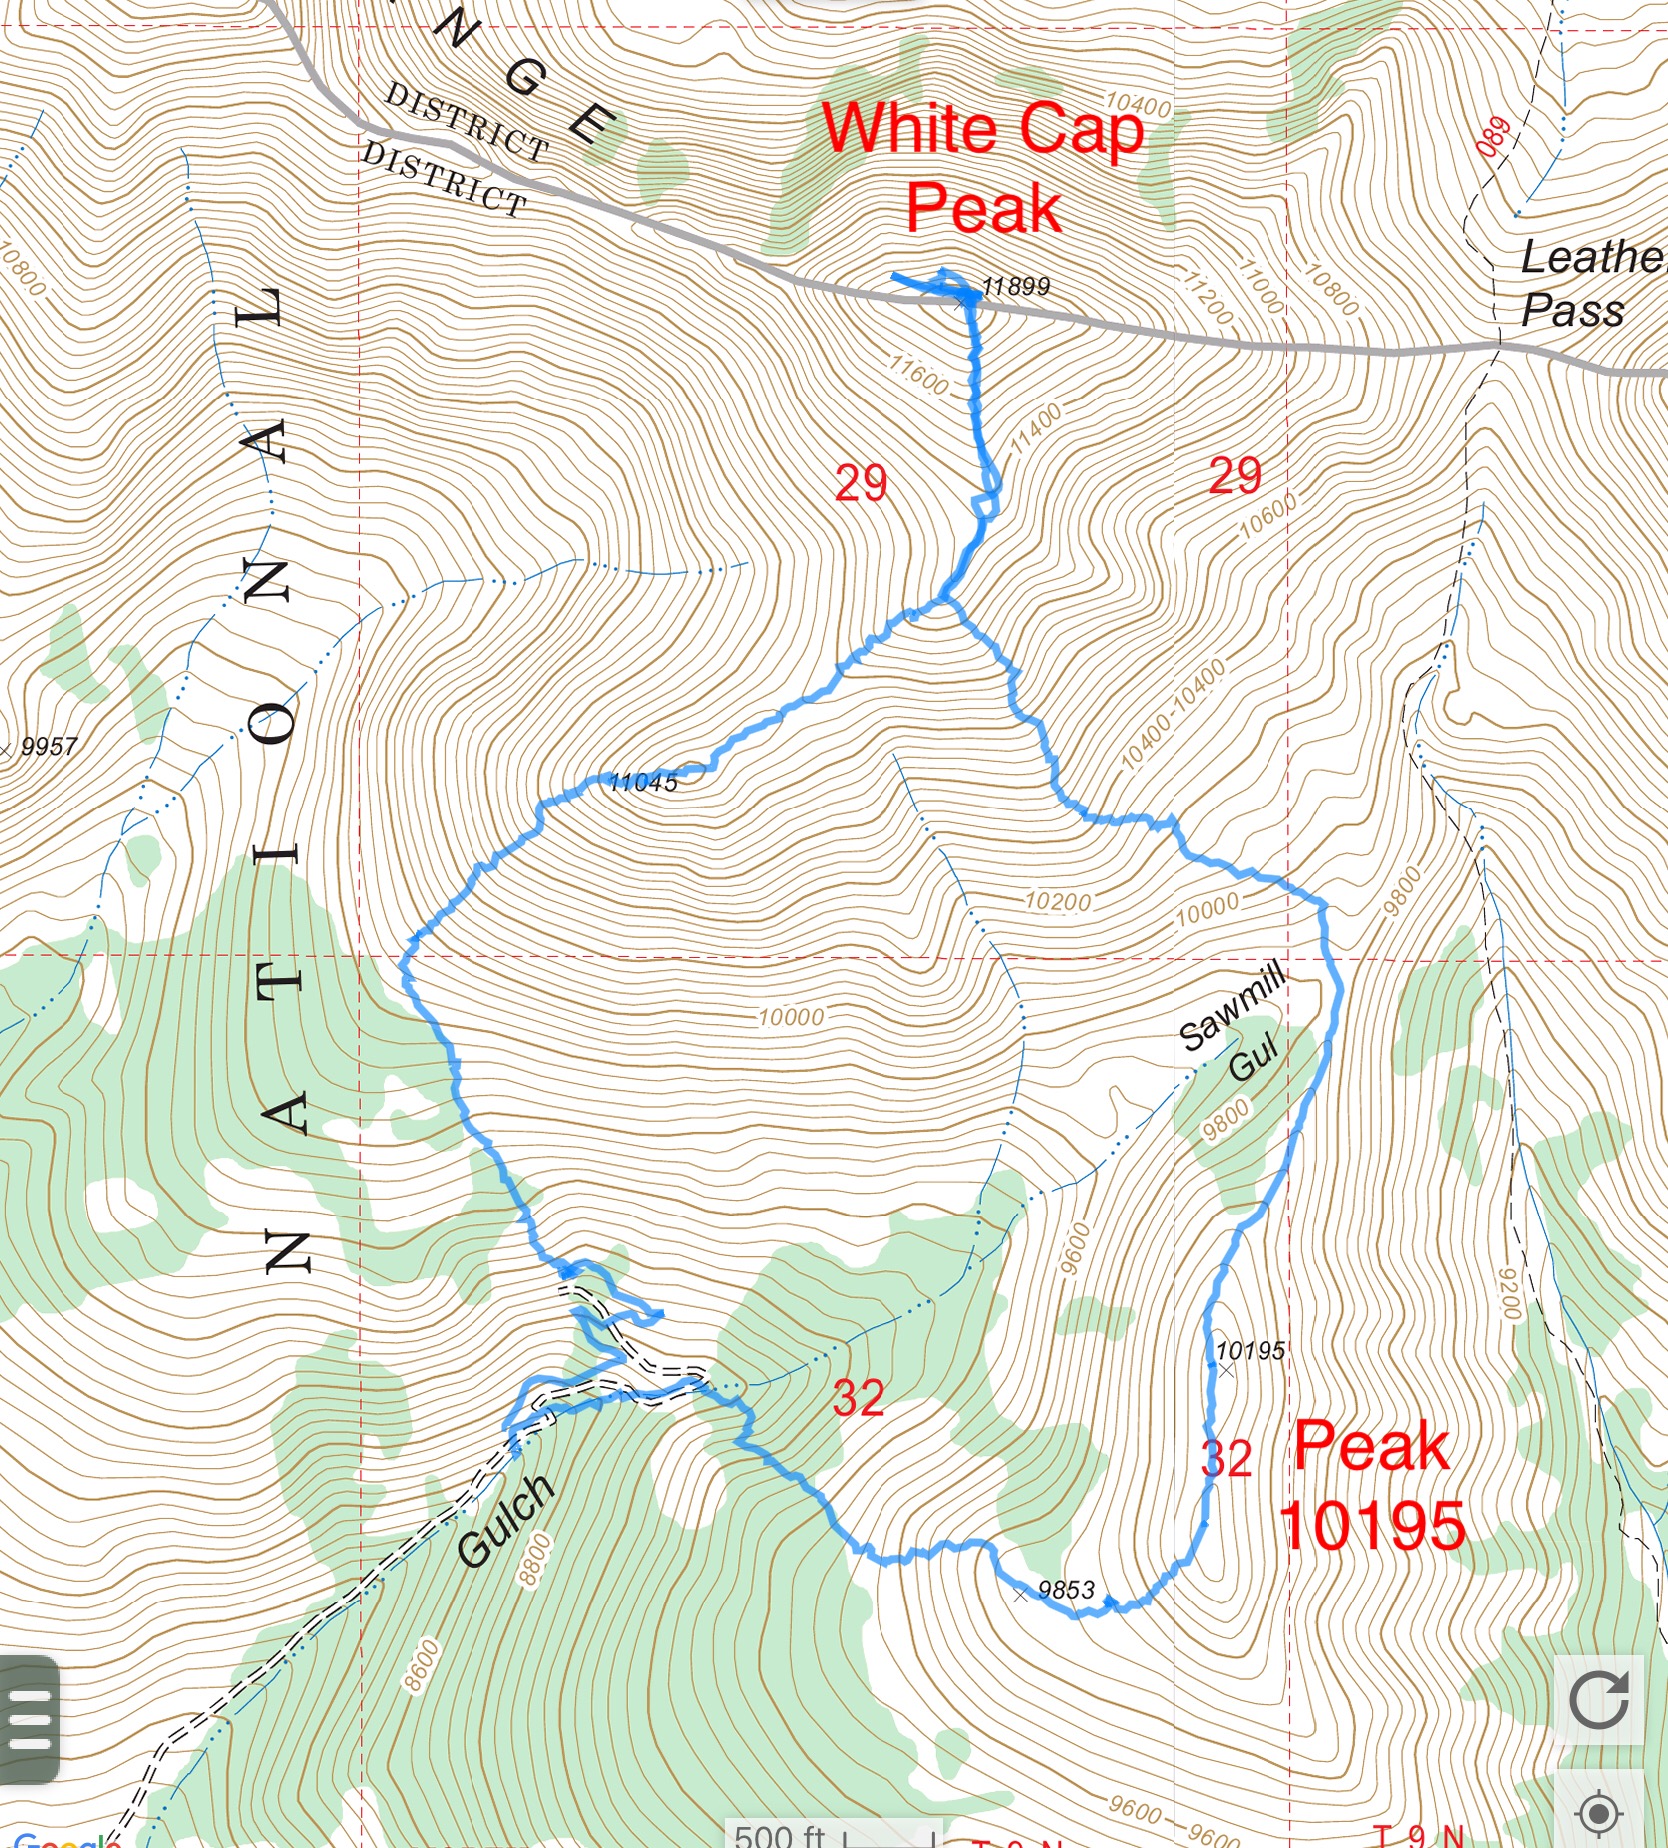 Derek’s GPS track. He ascended the north ridge amd descended the peak’s rounded west rib slopes.